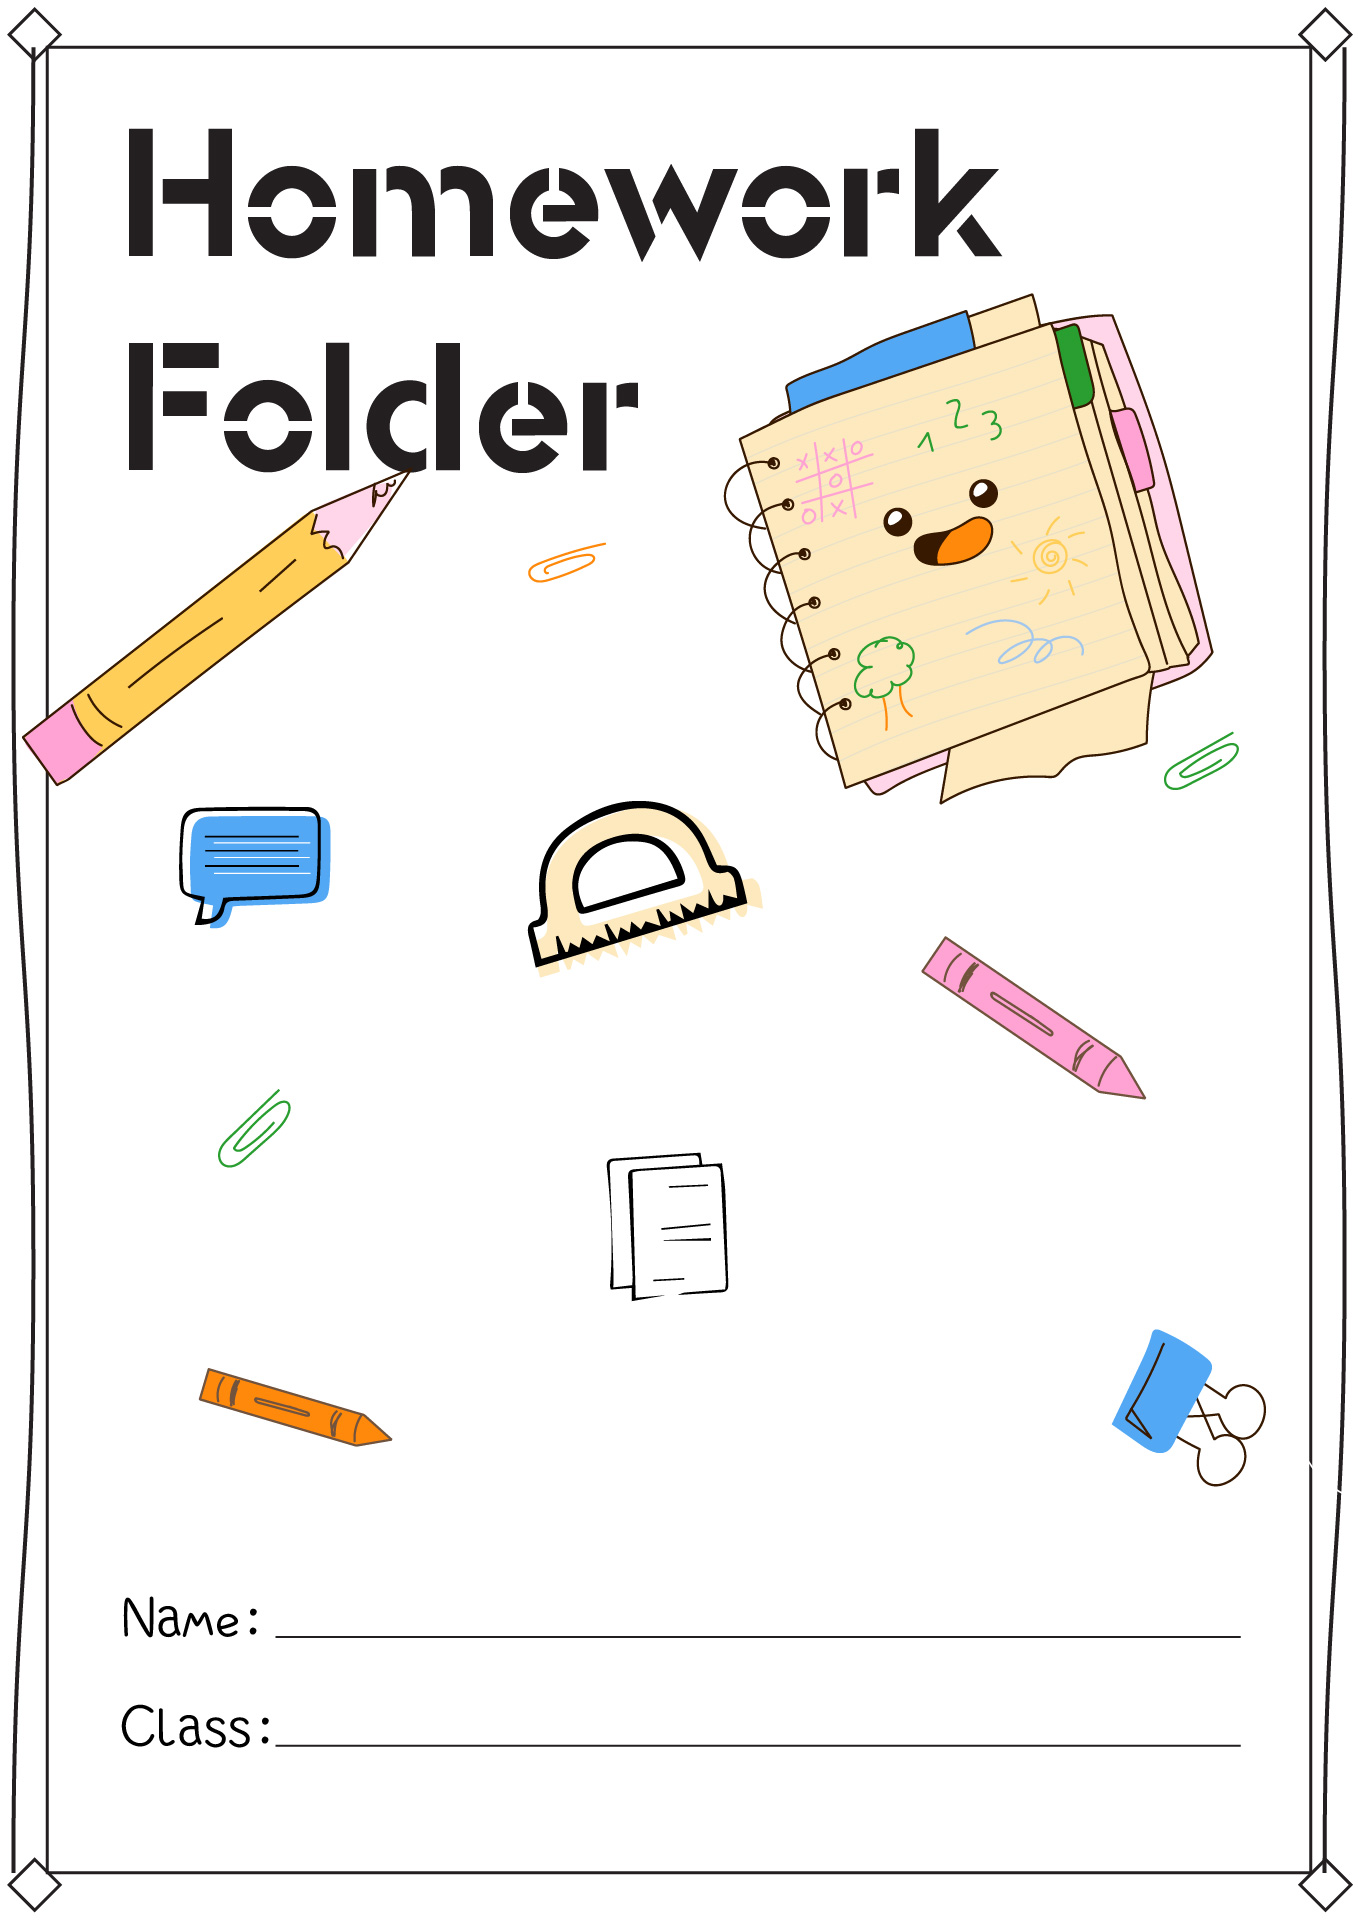 Homework Folder Cover Page